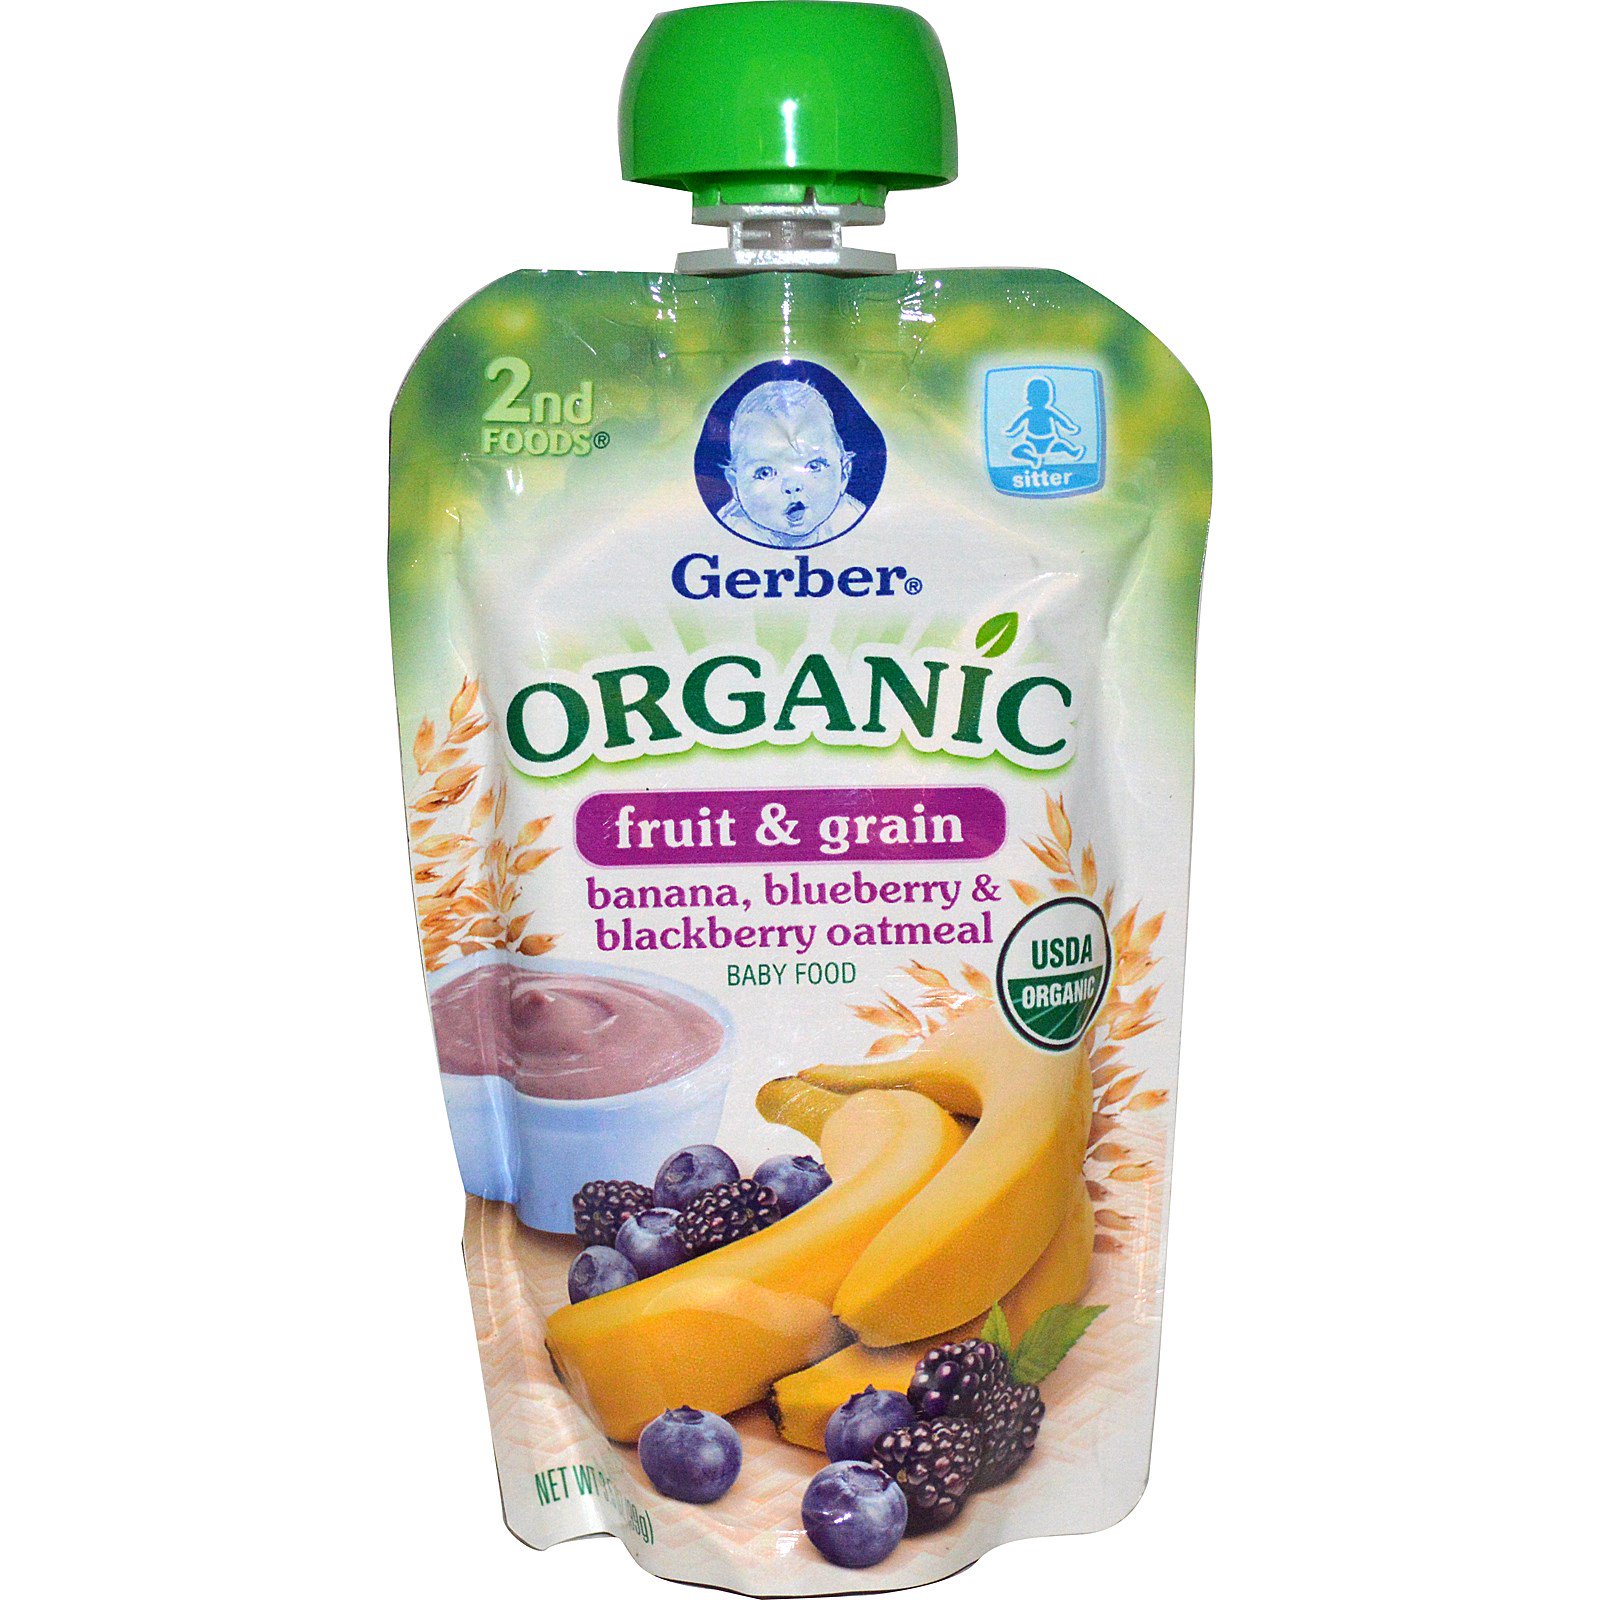 Gerber, 2nd Foods, Organic Baby Food, Fruit & Grain, Banana, Blueberry